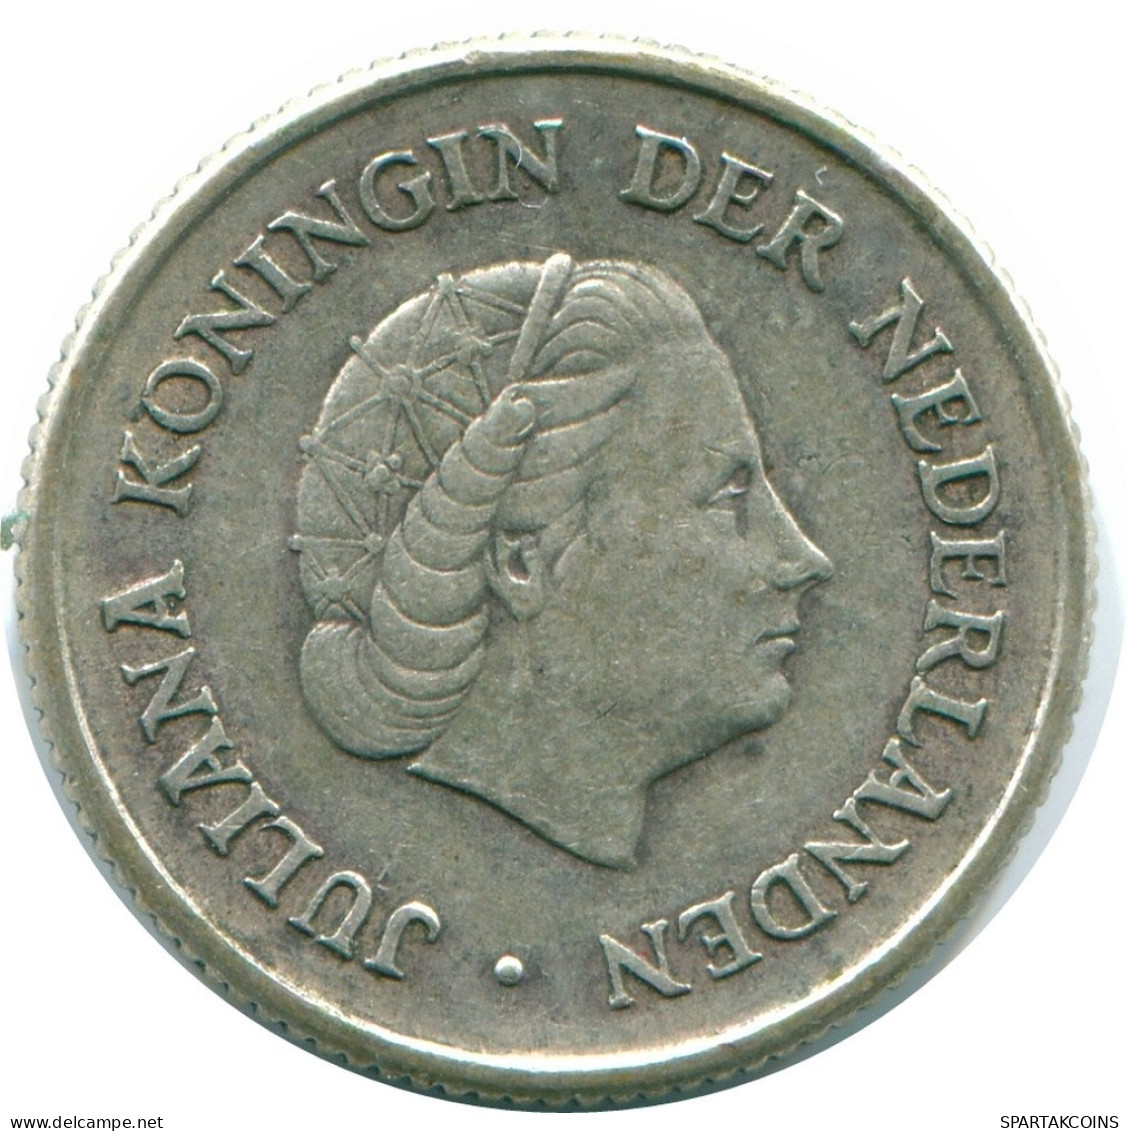 1/4 GULDEN 1967 NIEDERLÄNDISCHE ANTILLEN SILBER Koloniale Münze #NL11525.4.D.A - Netherlands Antilles